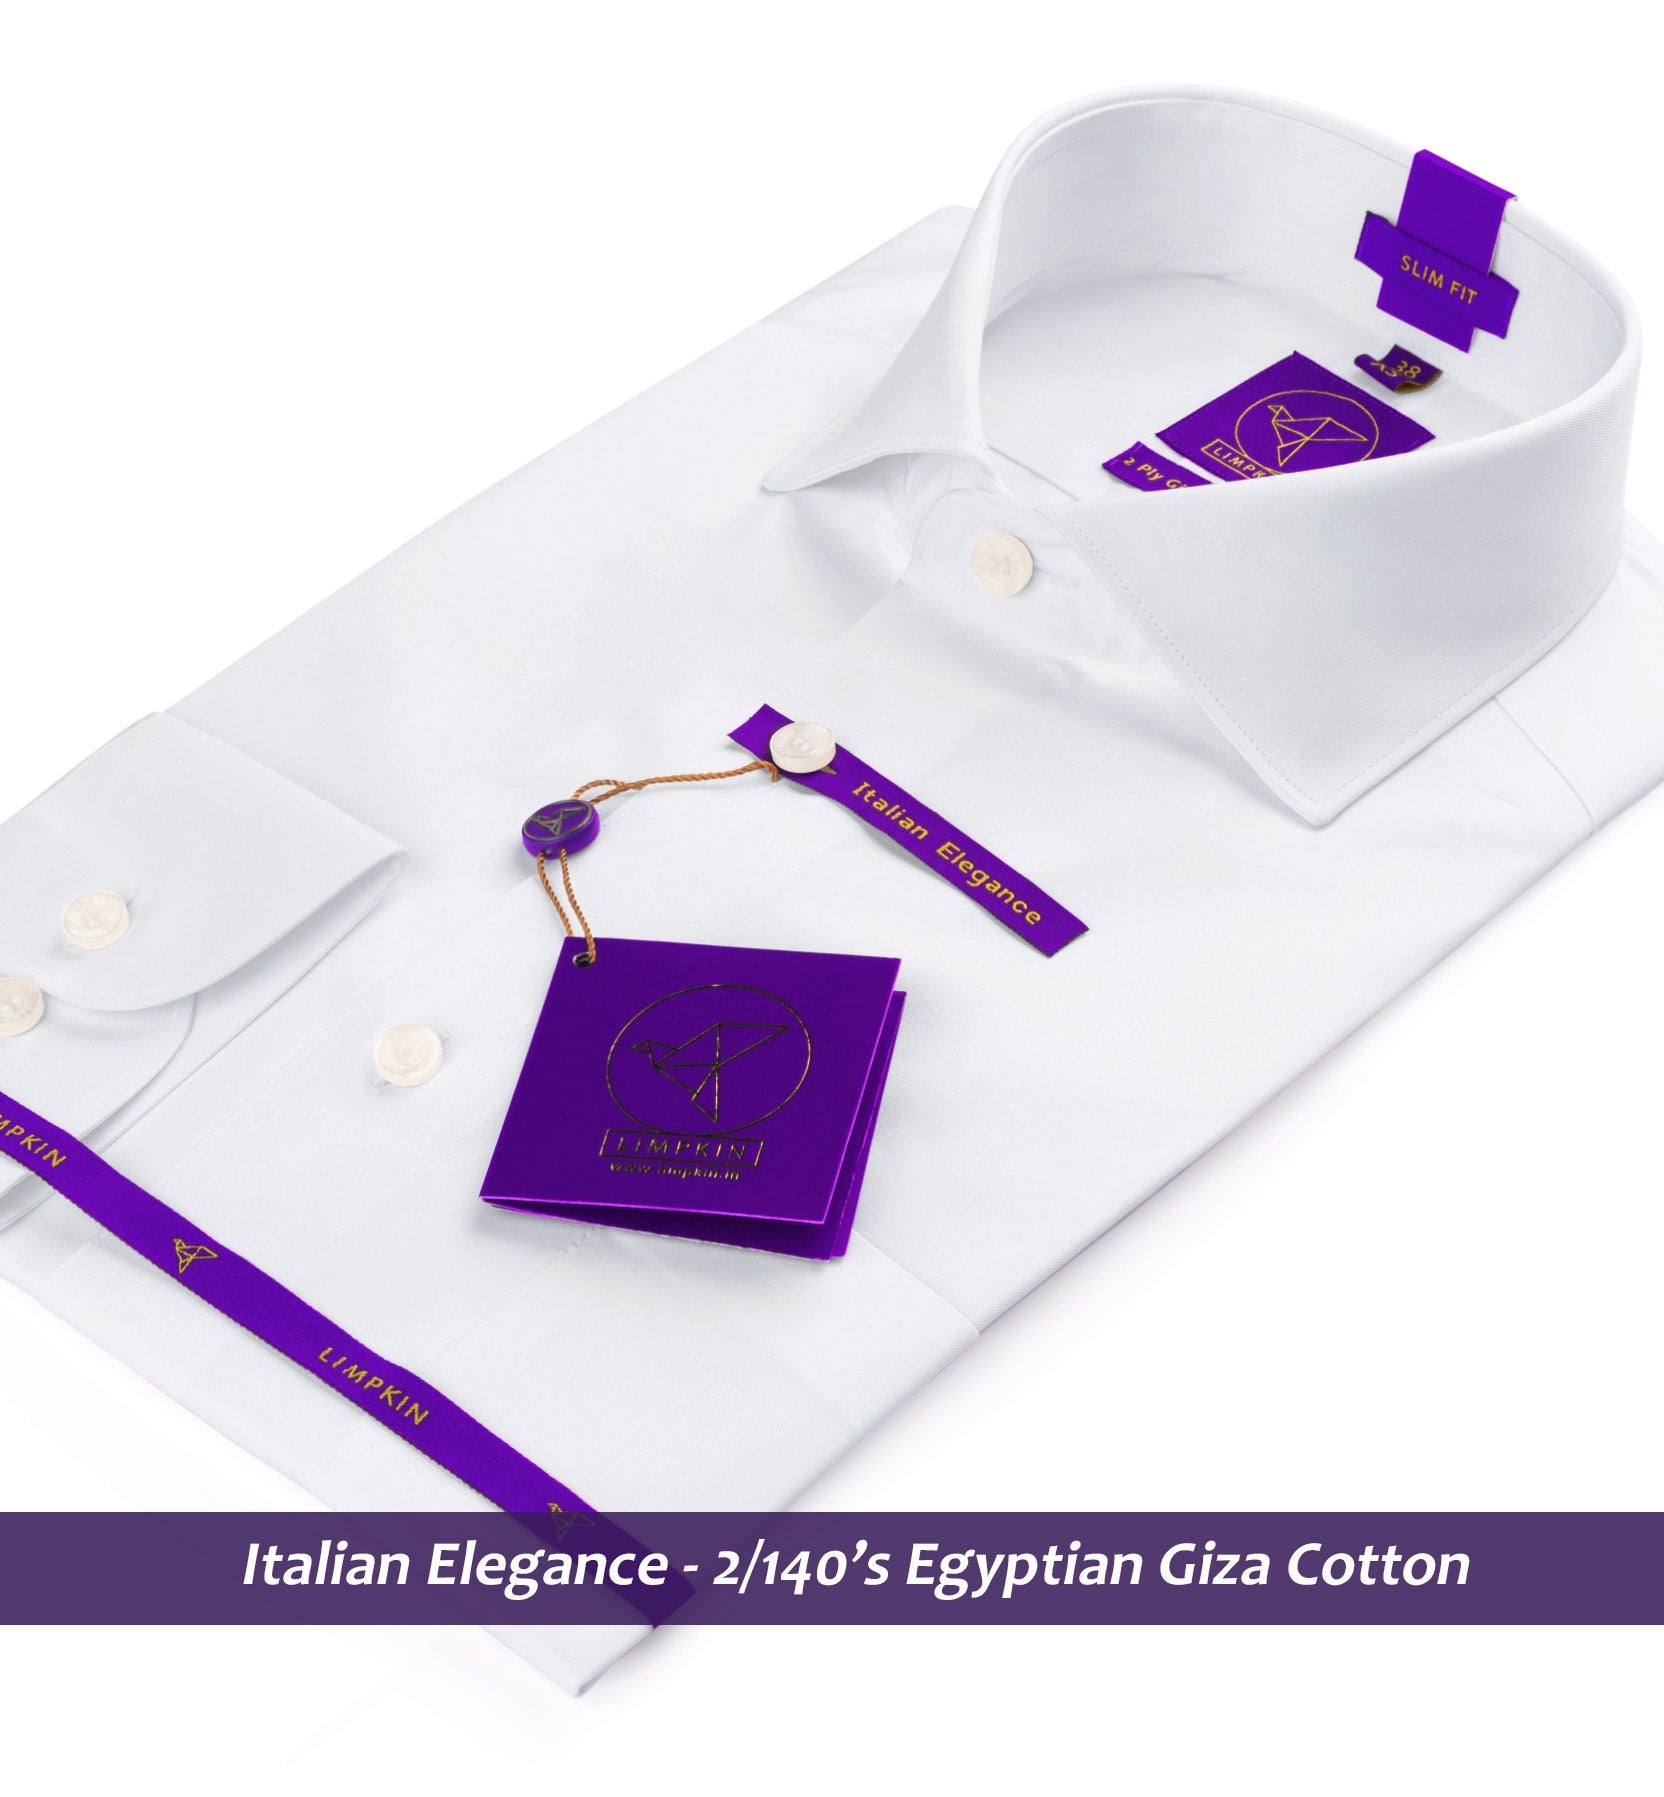 Manhattan- The Best Formal White- 2/140 Egyptian Giza Cotton